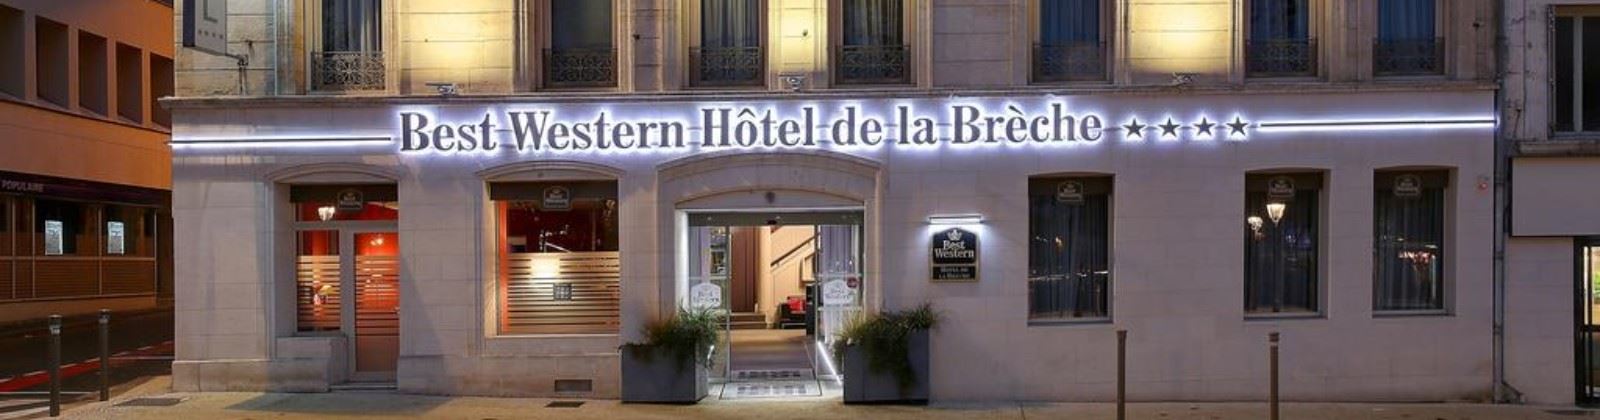 hotel de la breche olevene restaurant seminaire booking 